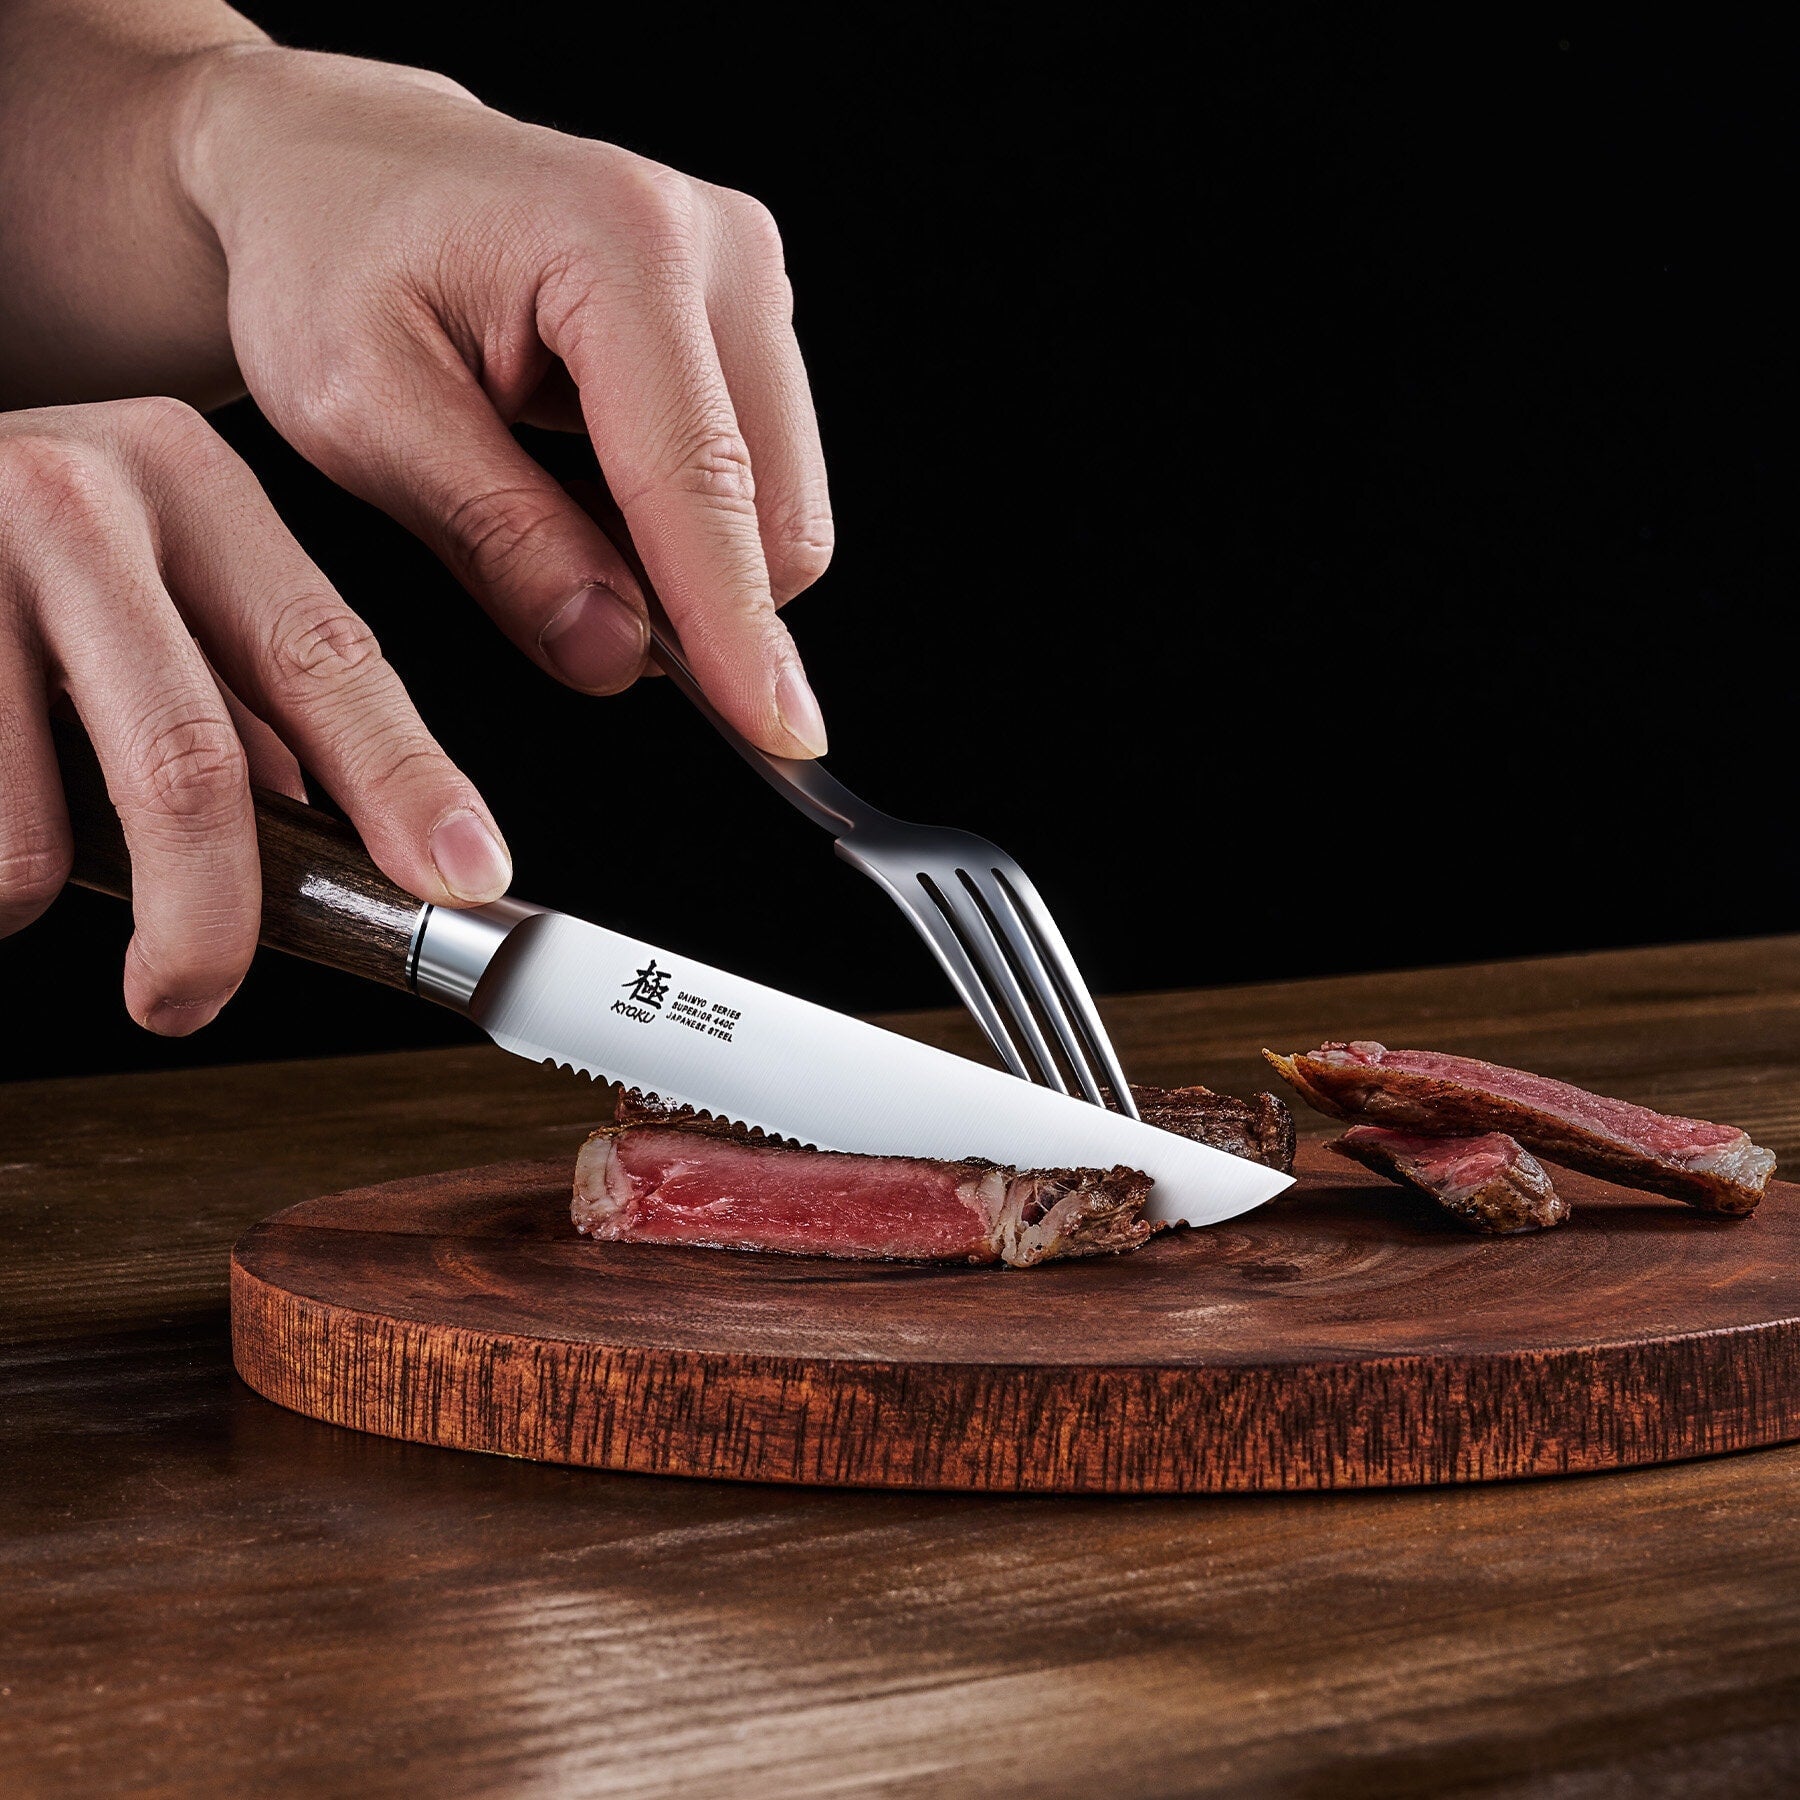 Kyoku 4pcs Non-Serrated Damascus Steel Steak Knife Set 丨Shogun Series